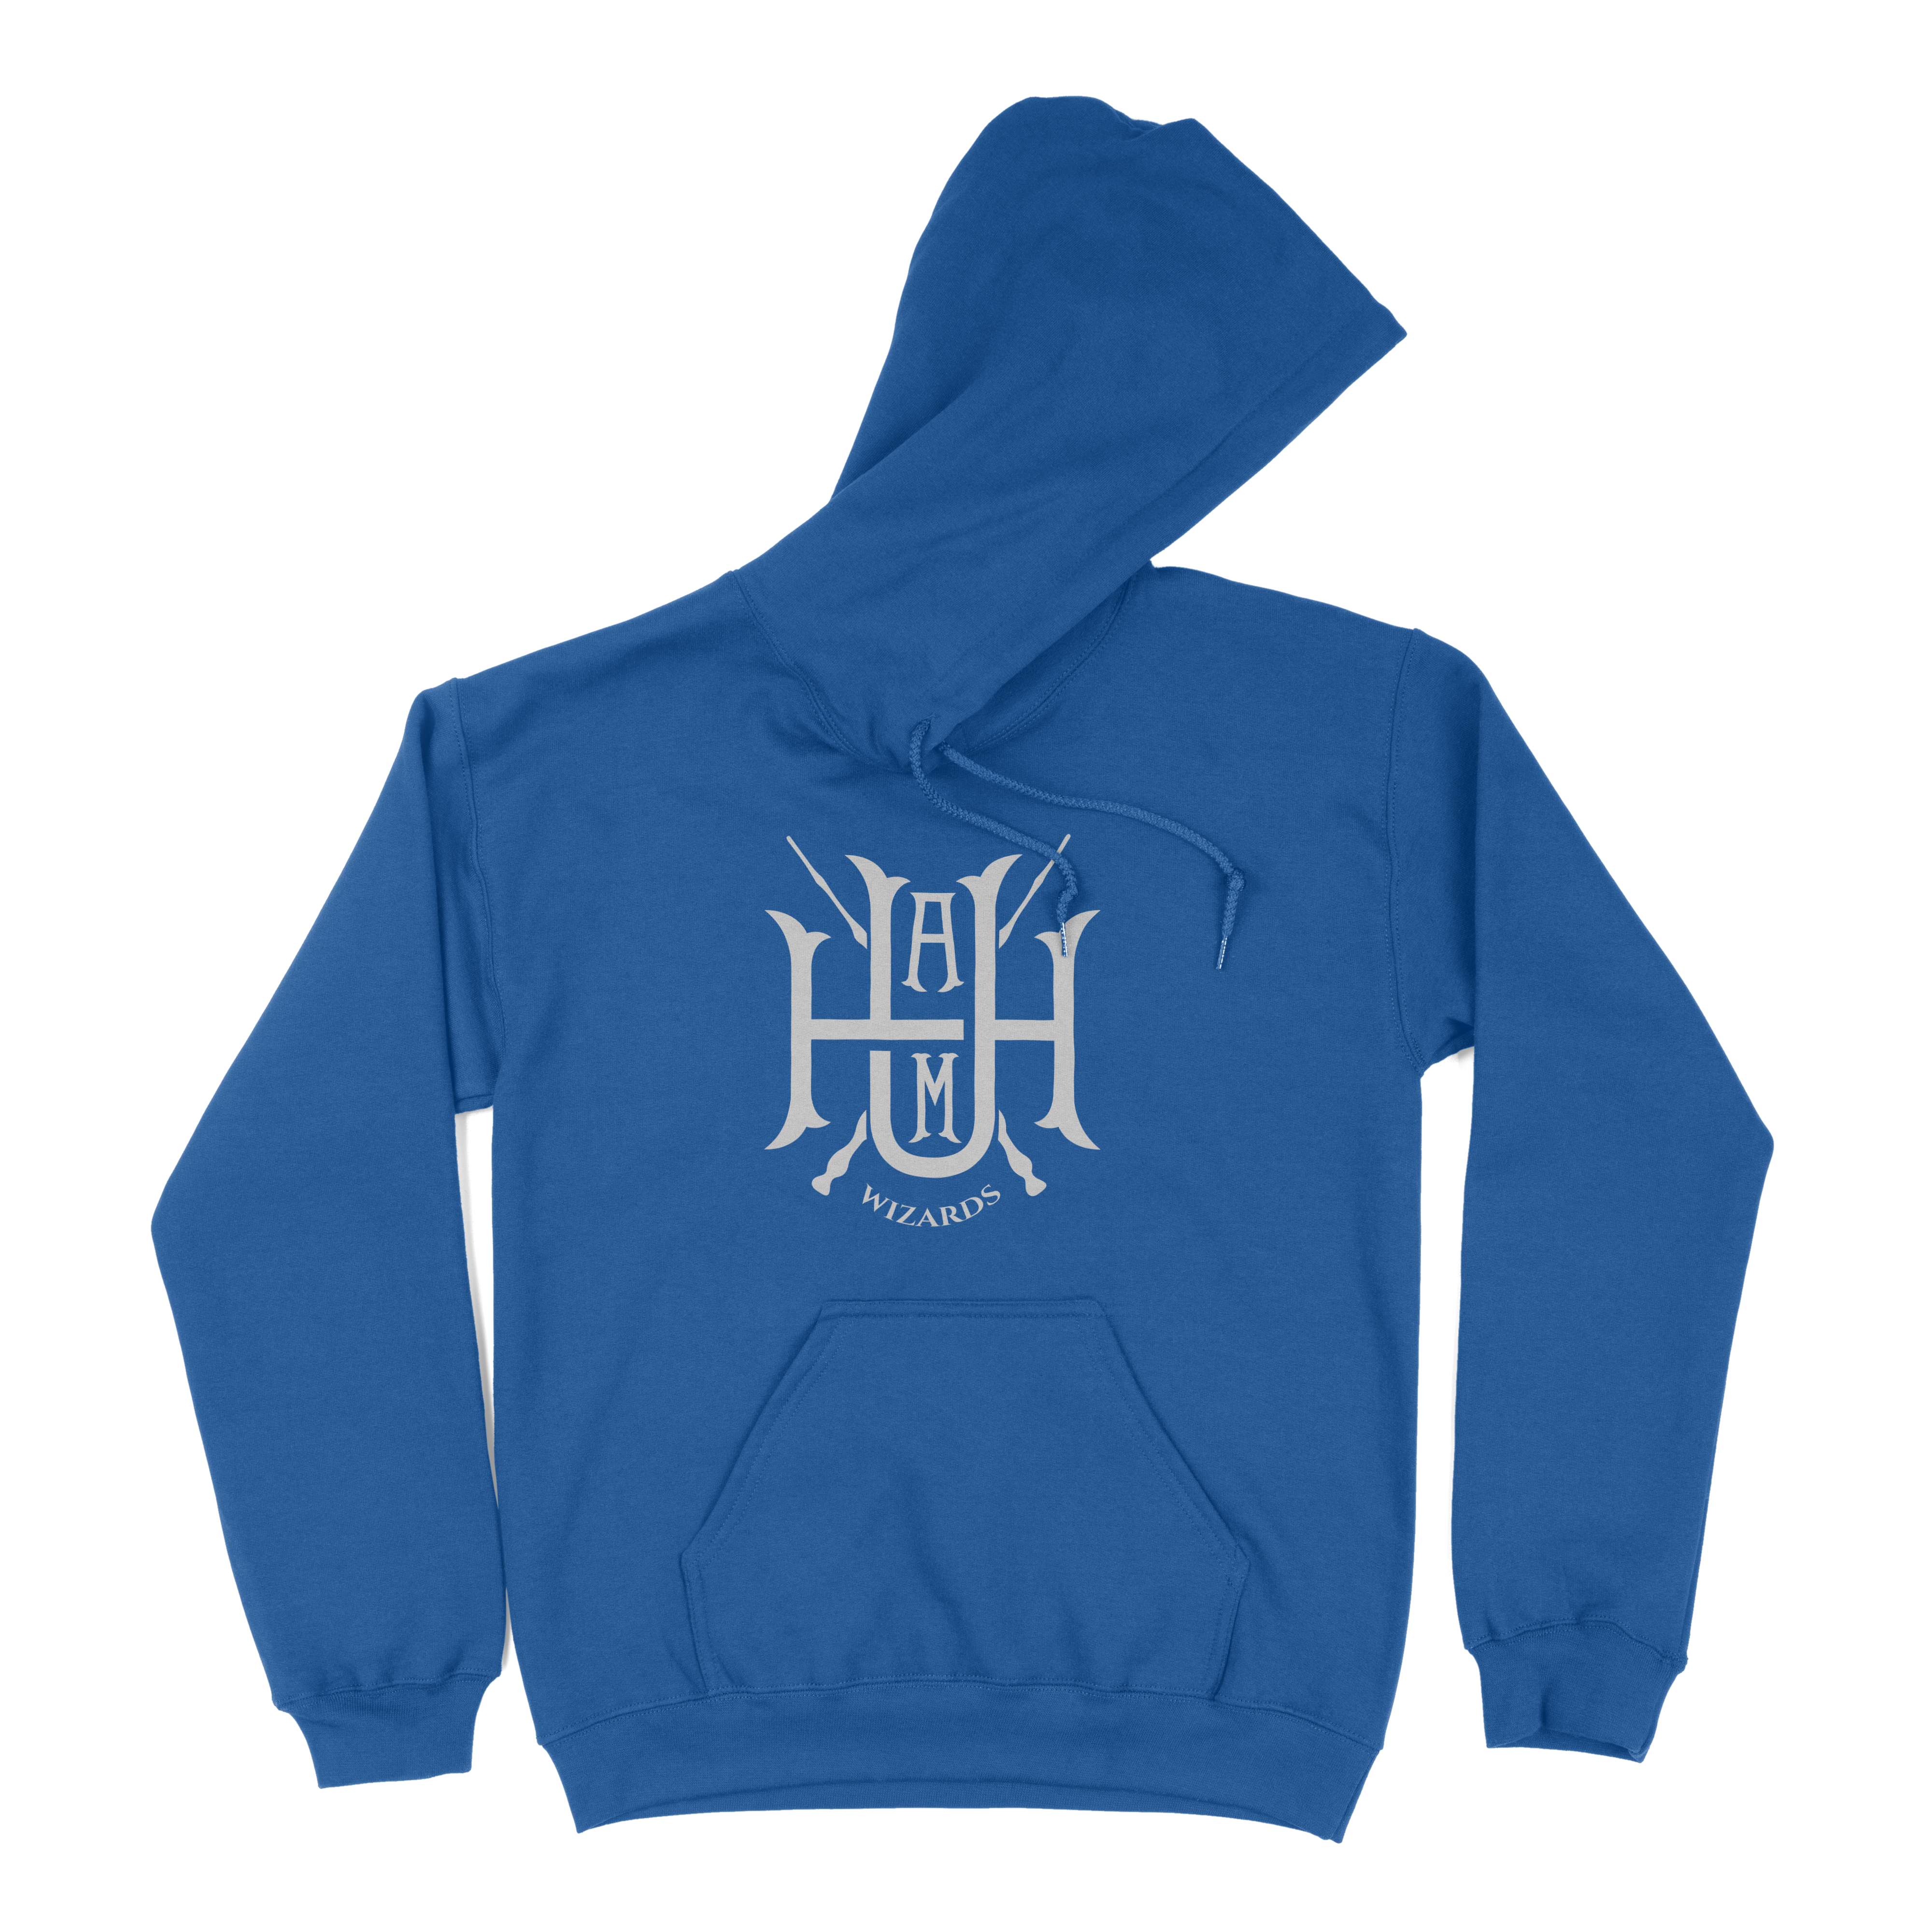 HAMU Wizards Hoodie (Blue House)